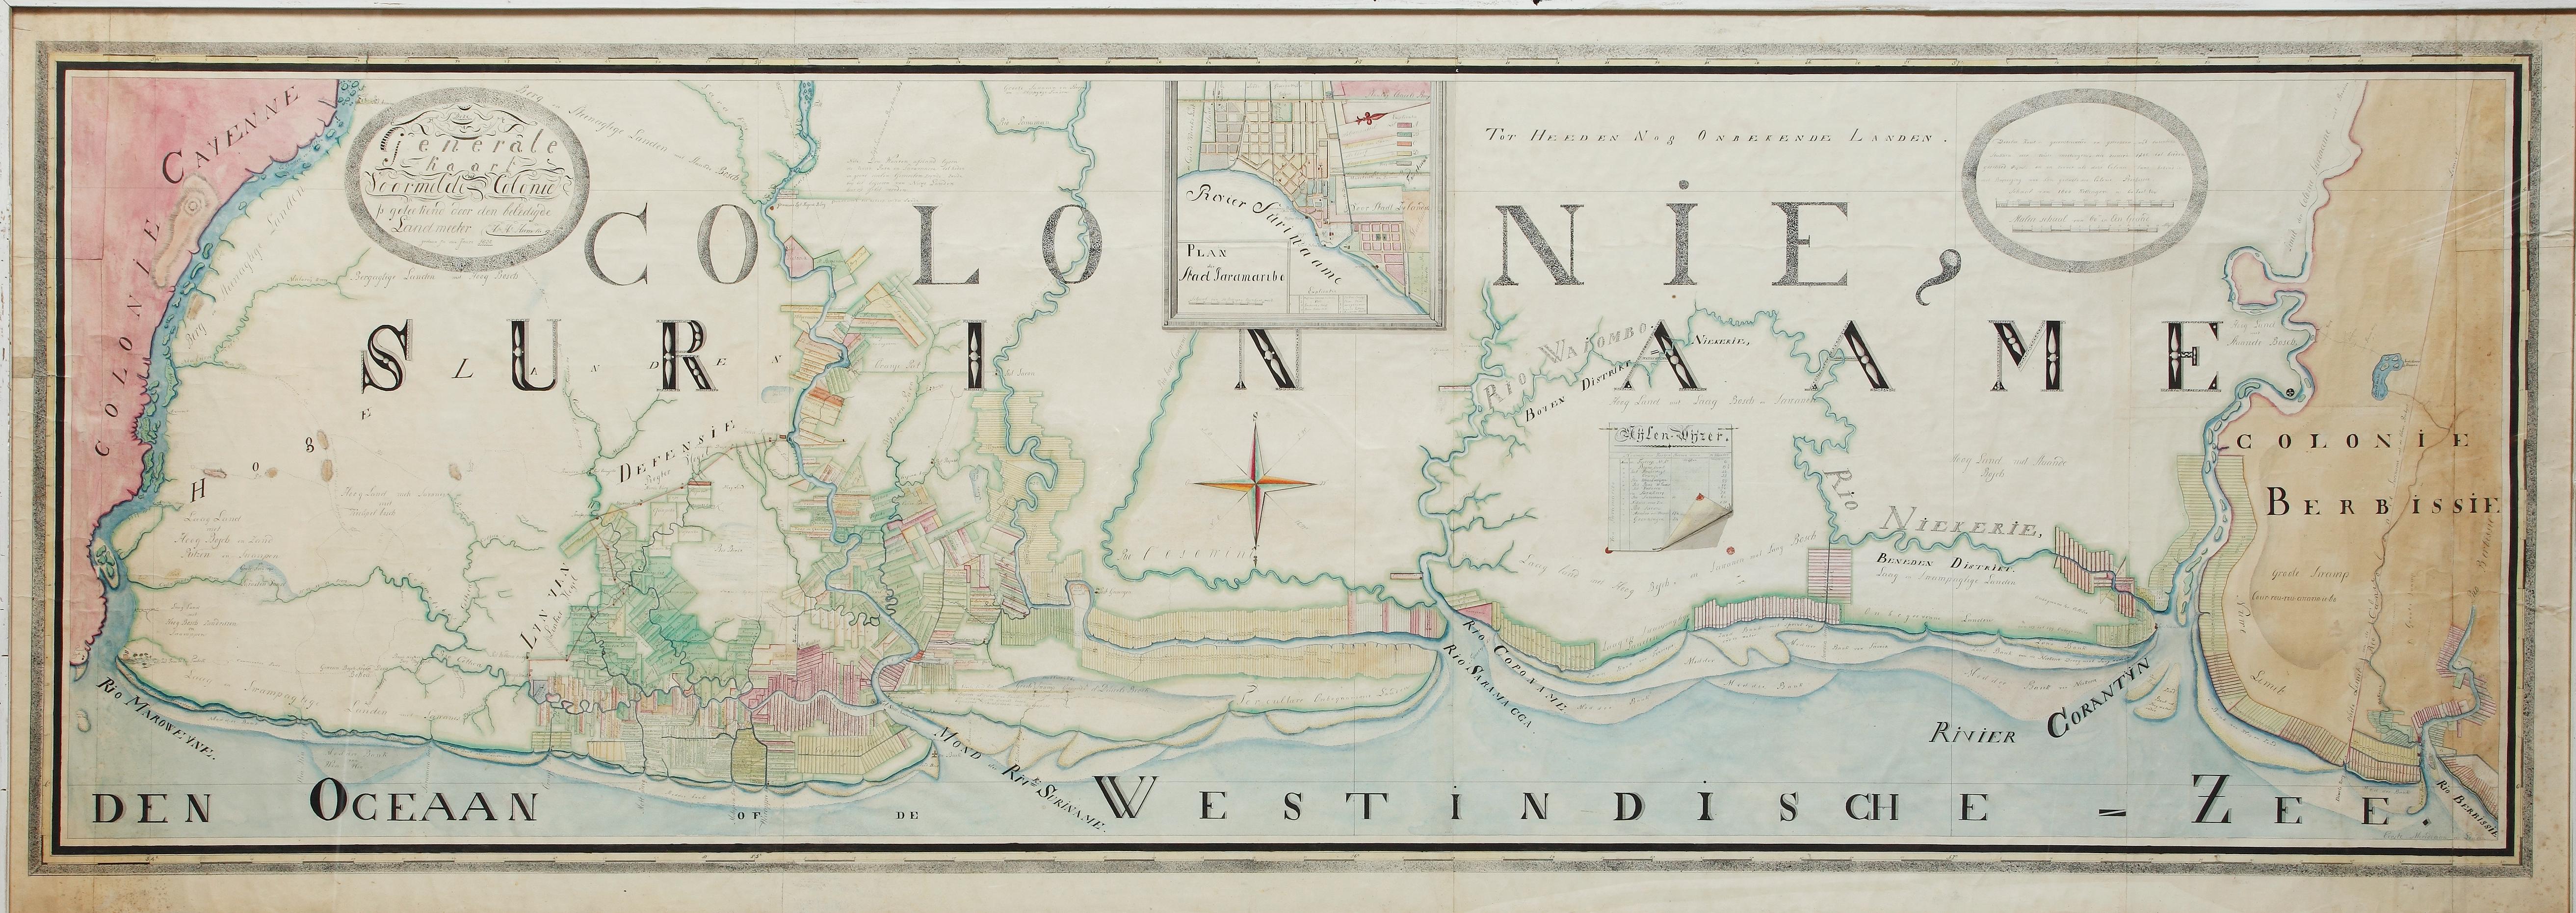 A unique large hand-drawn map of Surinam by Albrecht Helmut Hiemcke (German, 1760-1839)

?

'Colonie Surinaame', 1830

A large hand-drawn and coloured map of the colony of Surinam titled “Deze Generale kaart der vermelde colonie is getekend